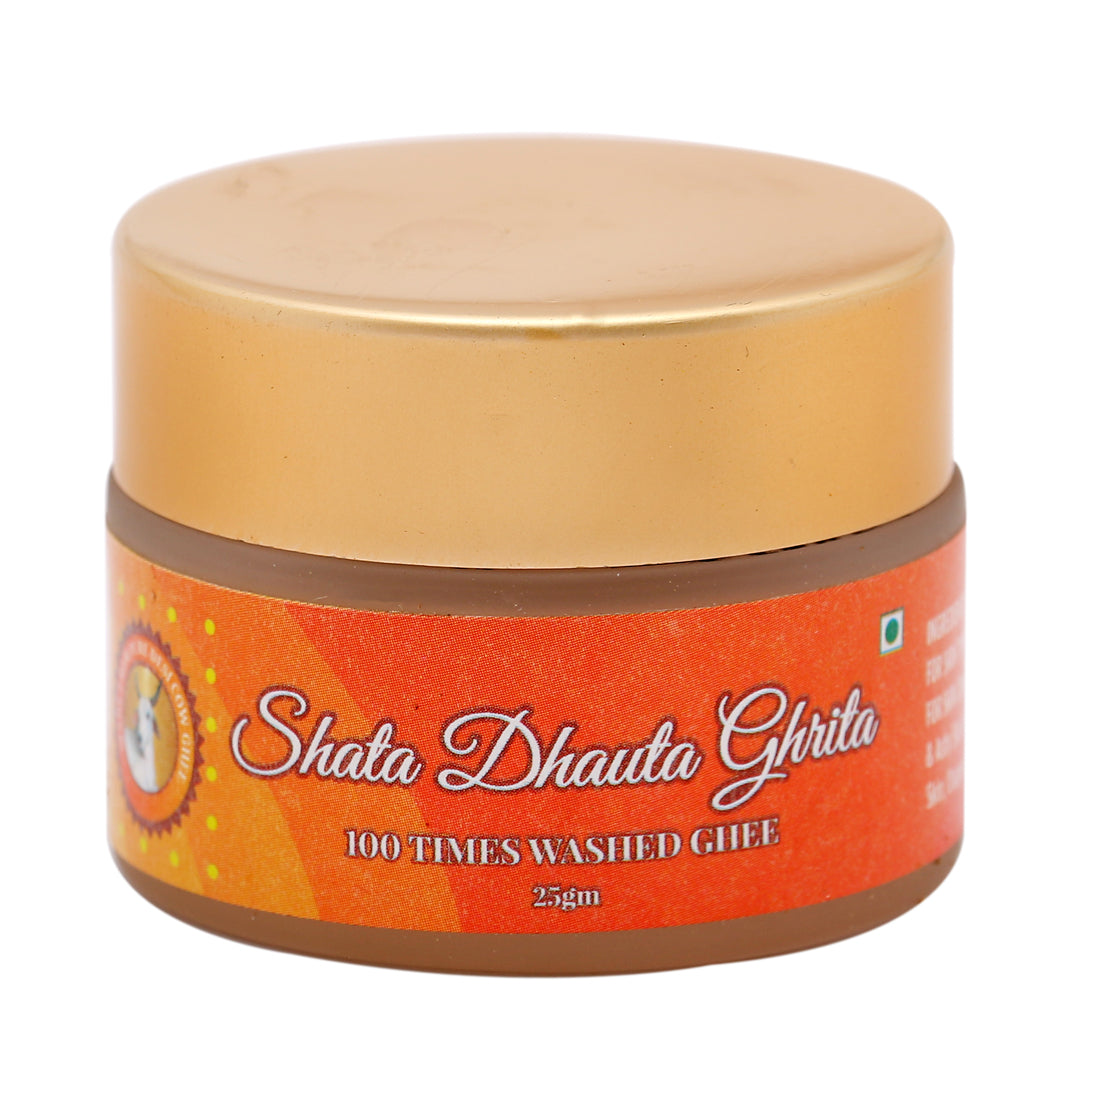 Gavyamart Shata Dhauta Ghrita - Skin Cream (100 time washed Ghee)